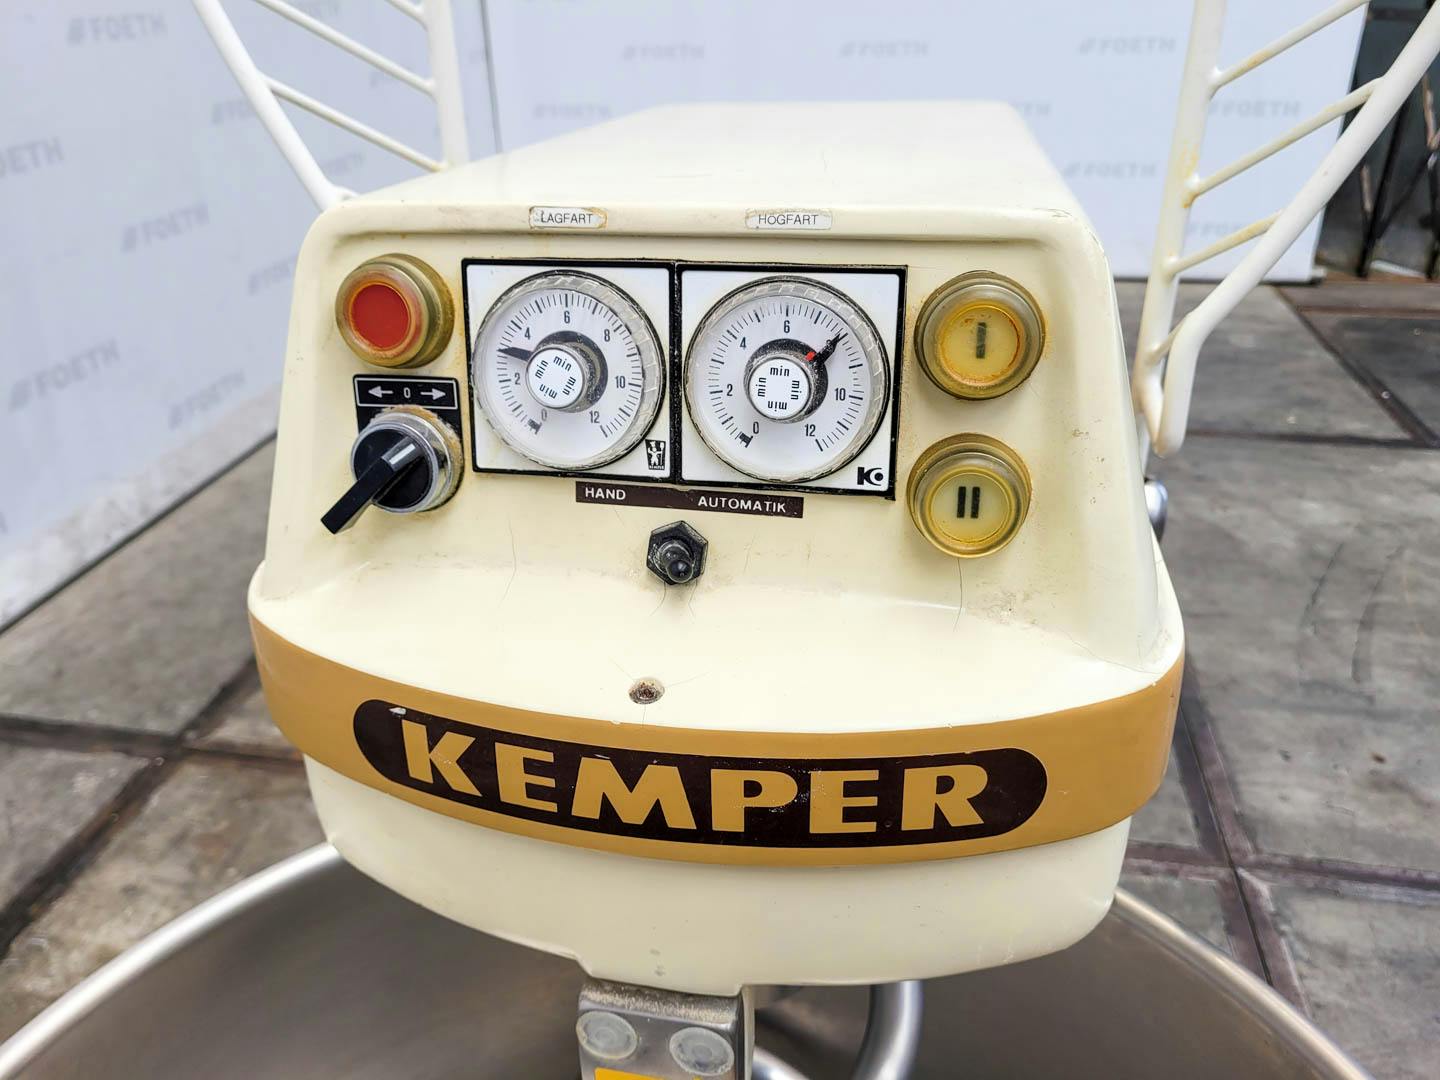 Kemper GmbH Spiral SP 50 L - Planetary mixer - image 6